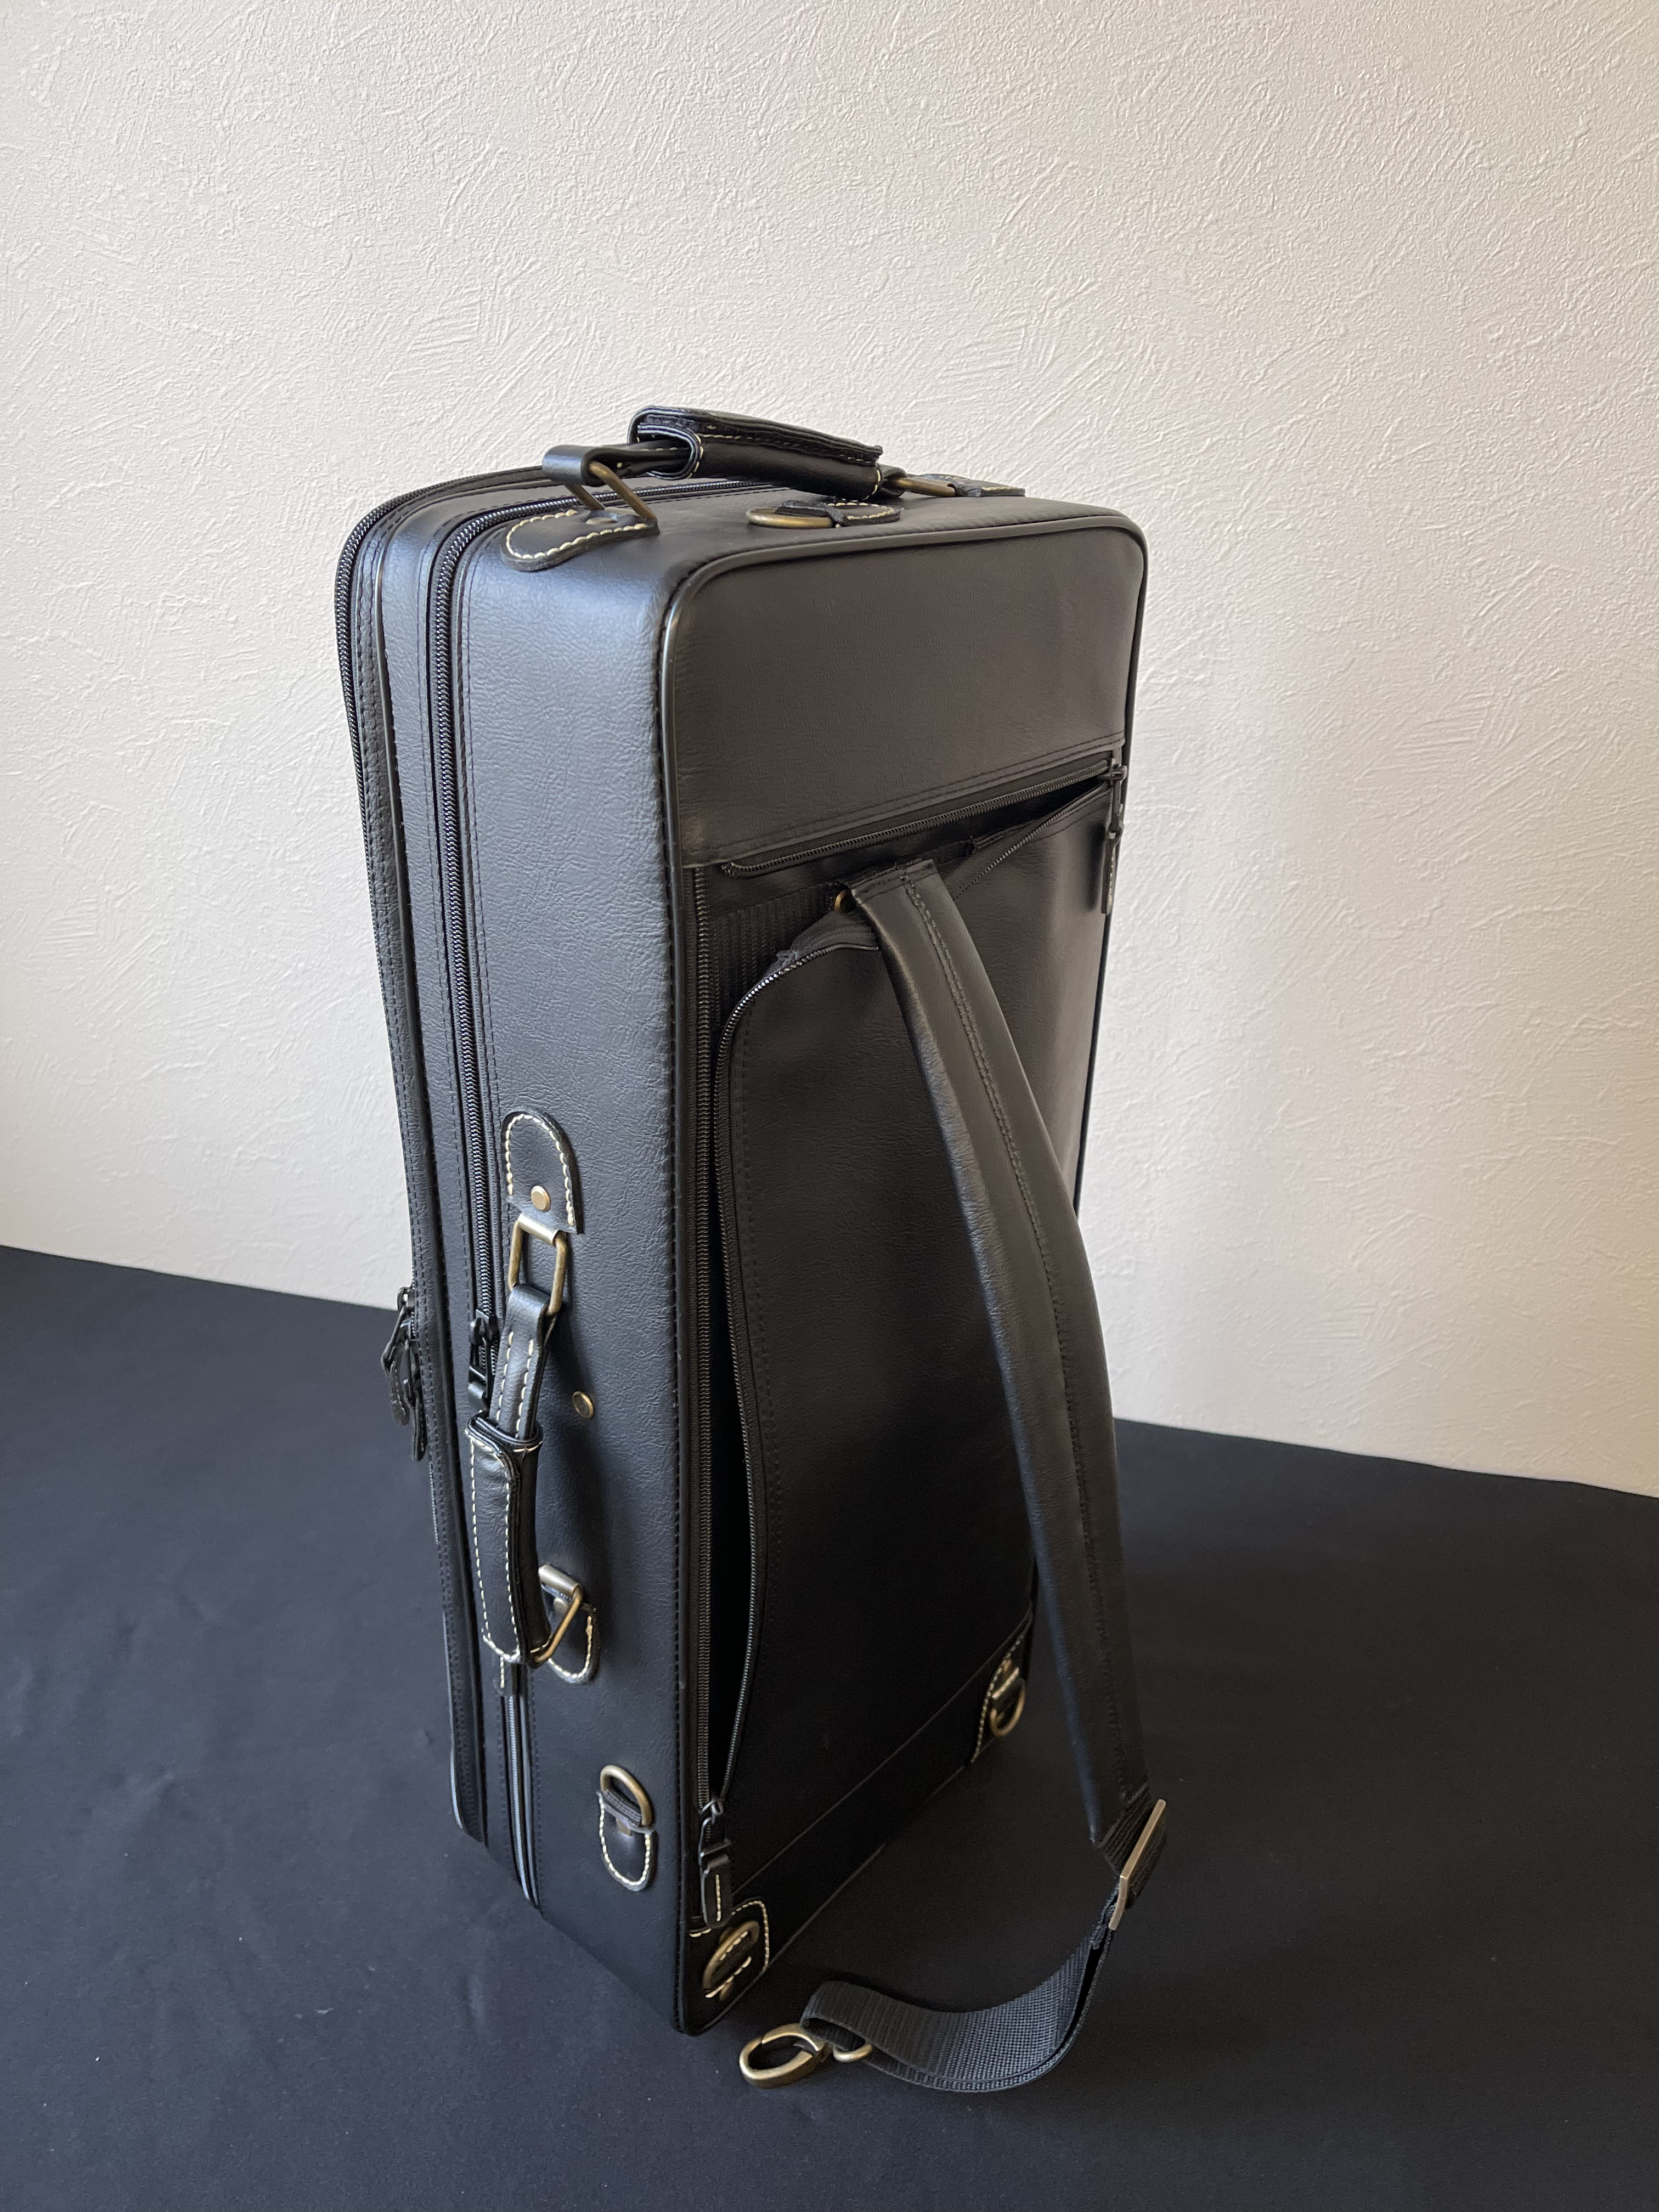 Yamaha_custom_case02